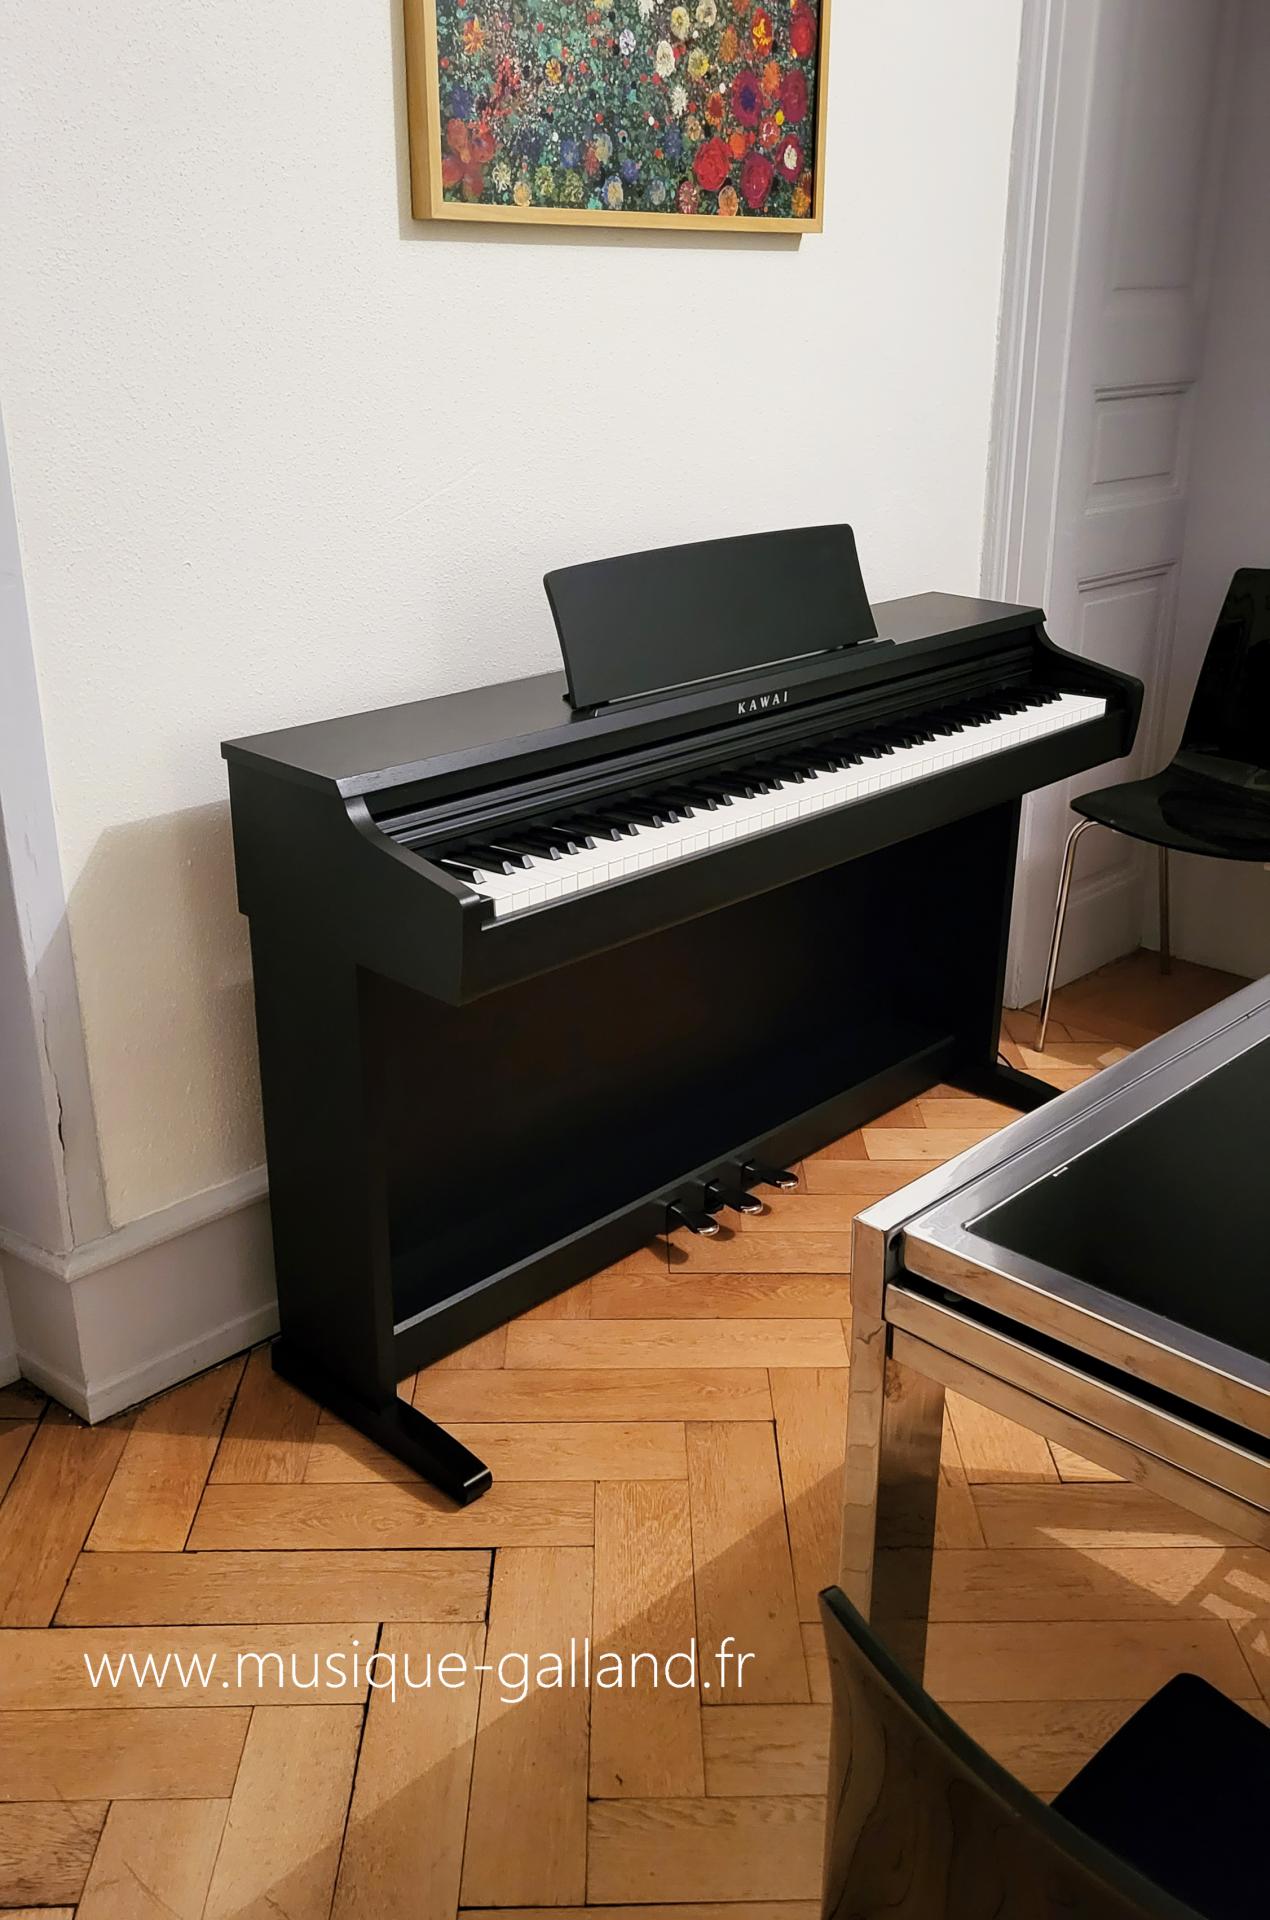 Piano numérique KAWAI KDP120-B noir mat